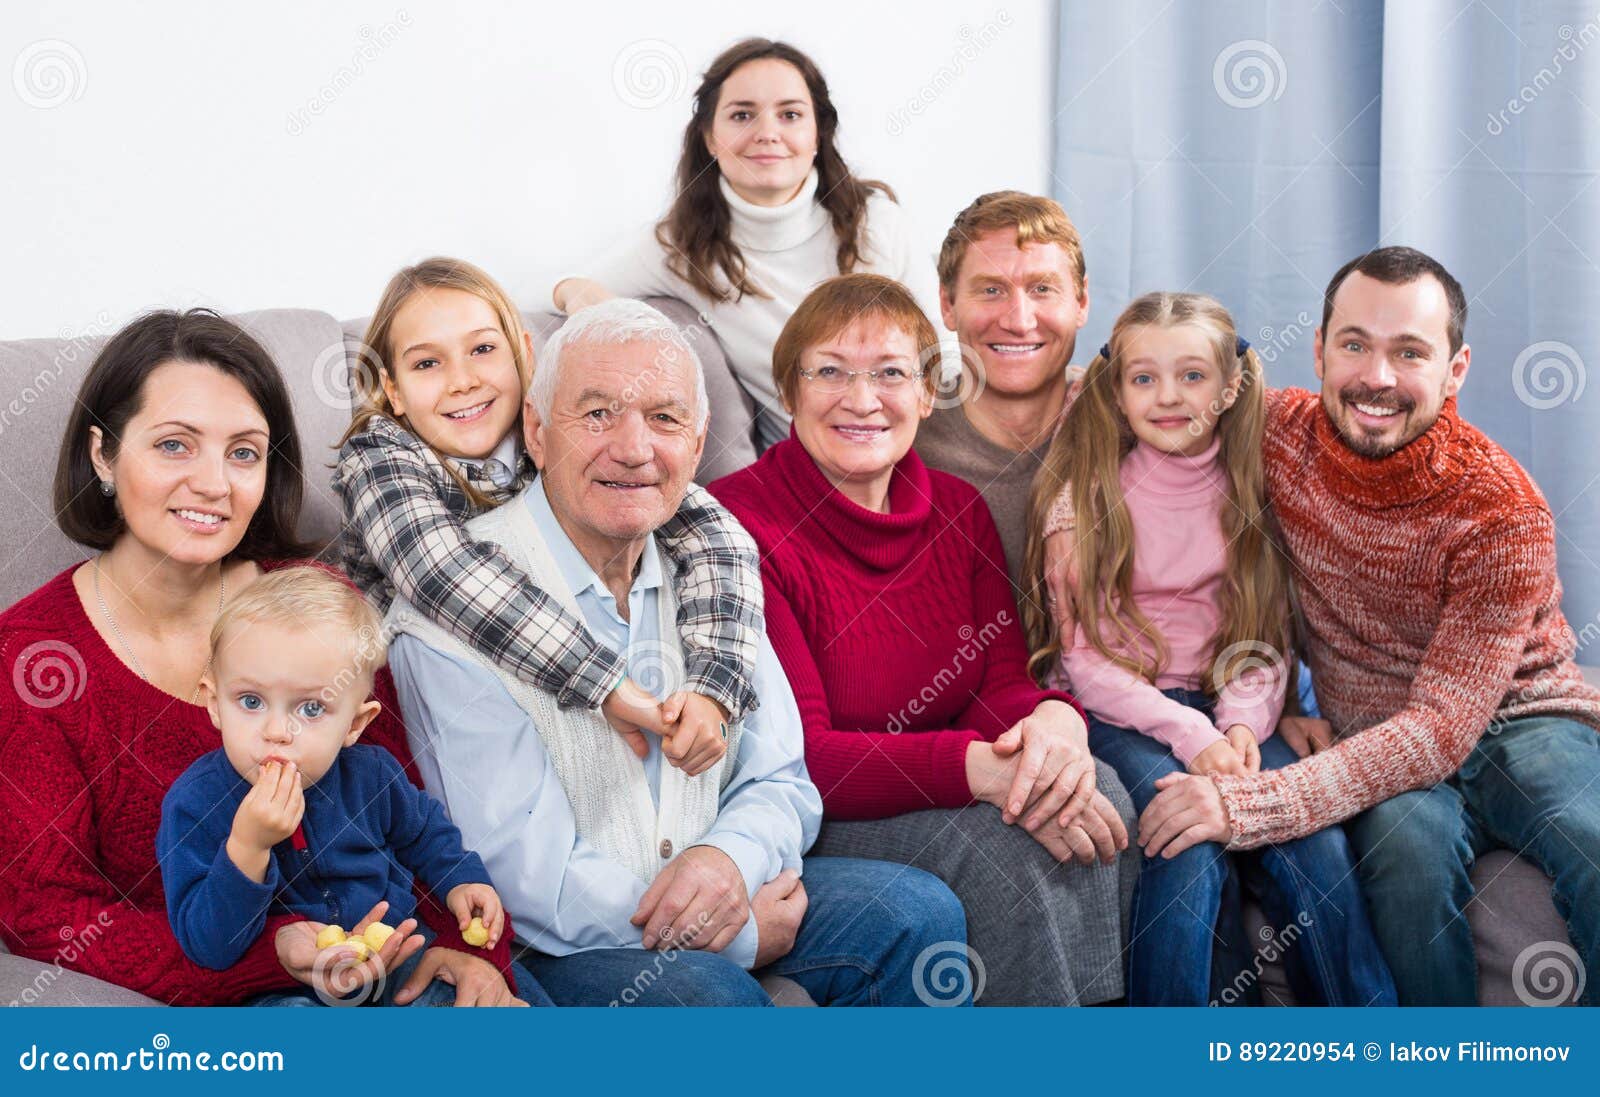 family members making family photo